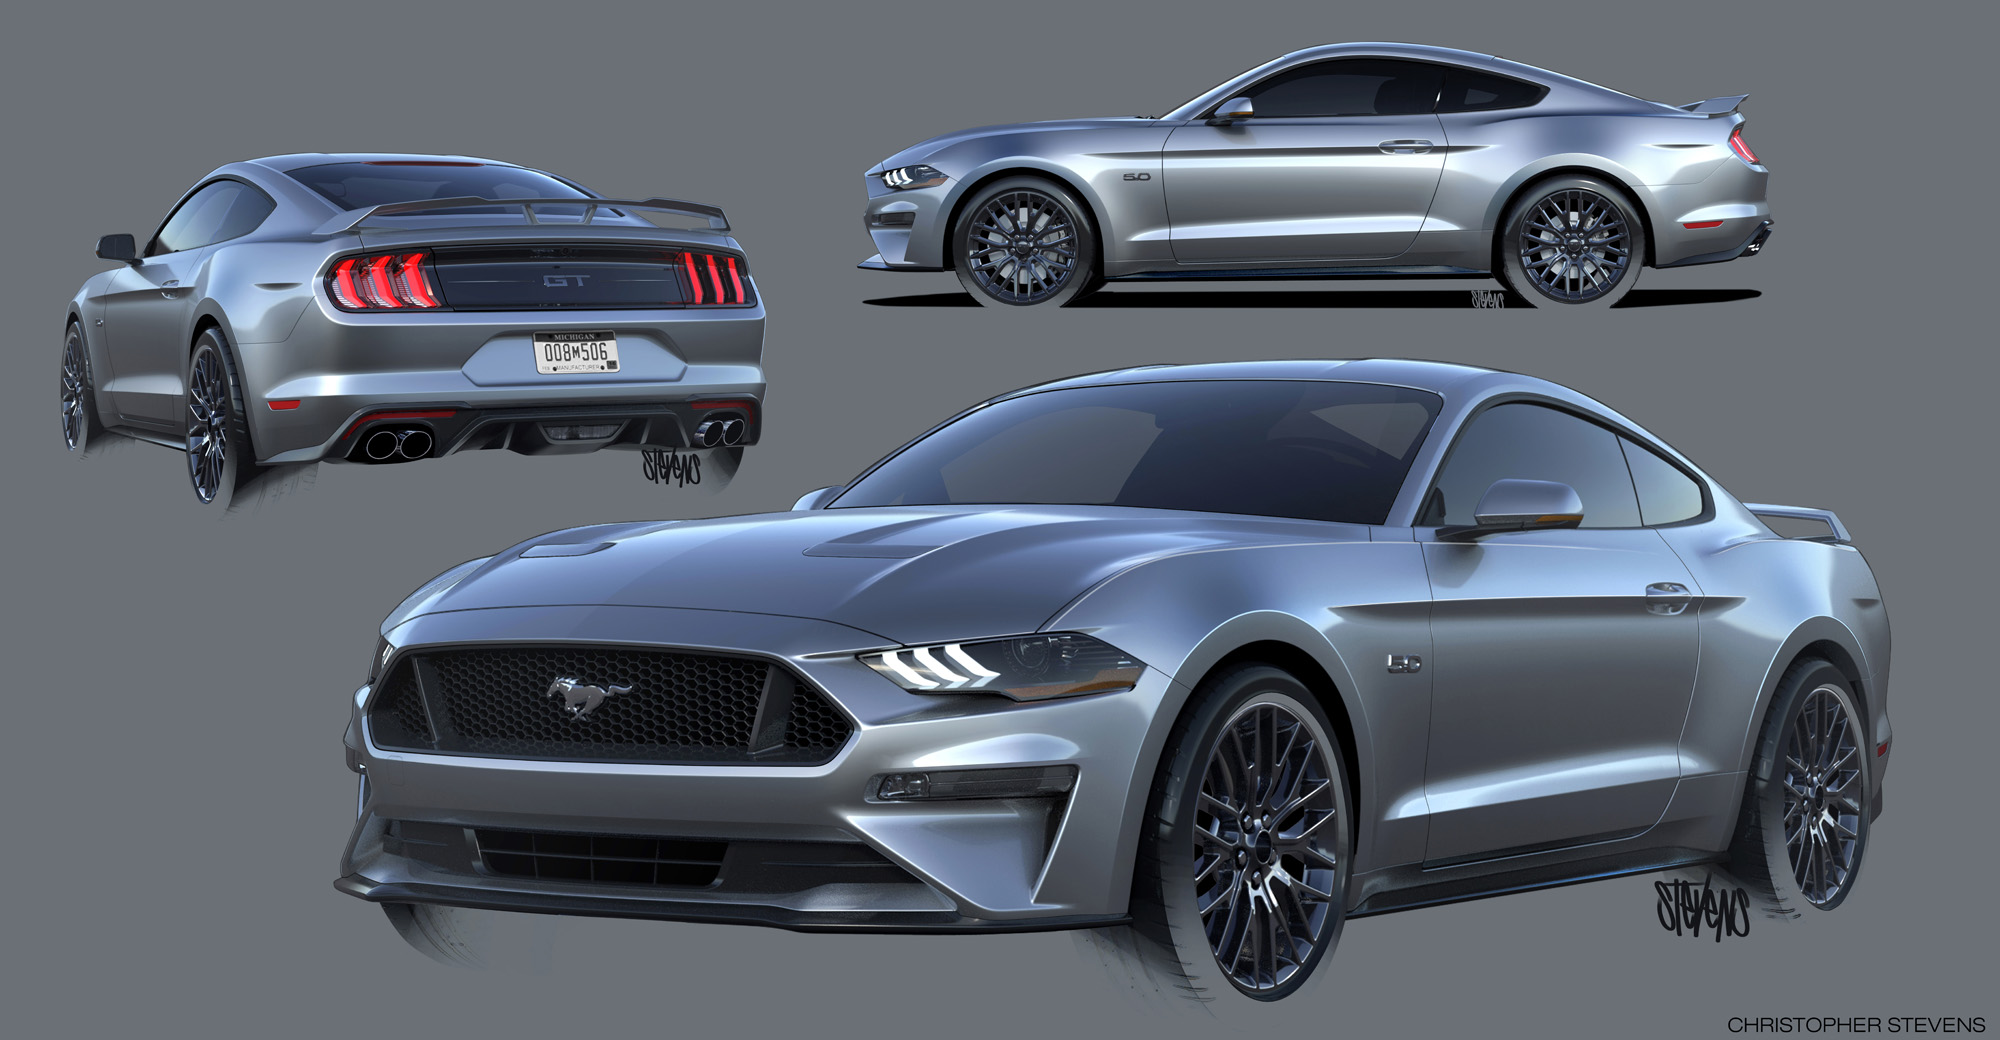 2018 Ford Mustang design sketch - MustangForums 2005 ford mustang fuse diagram 